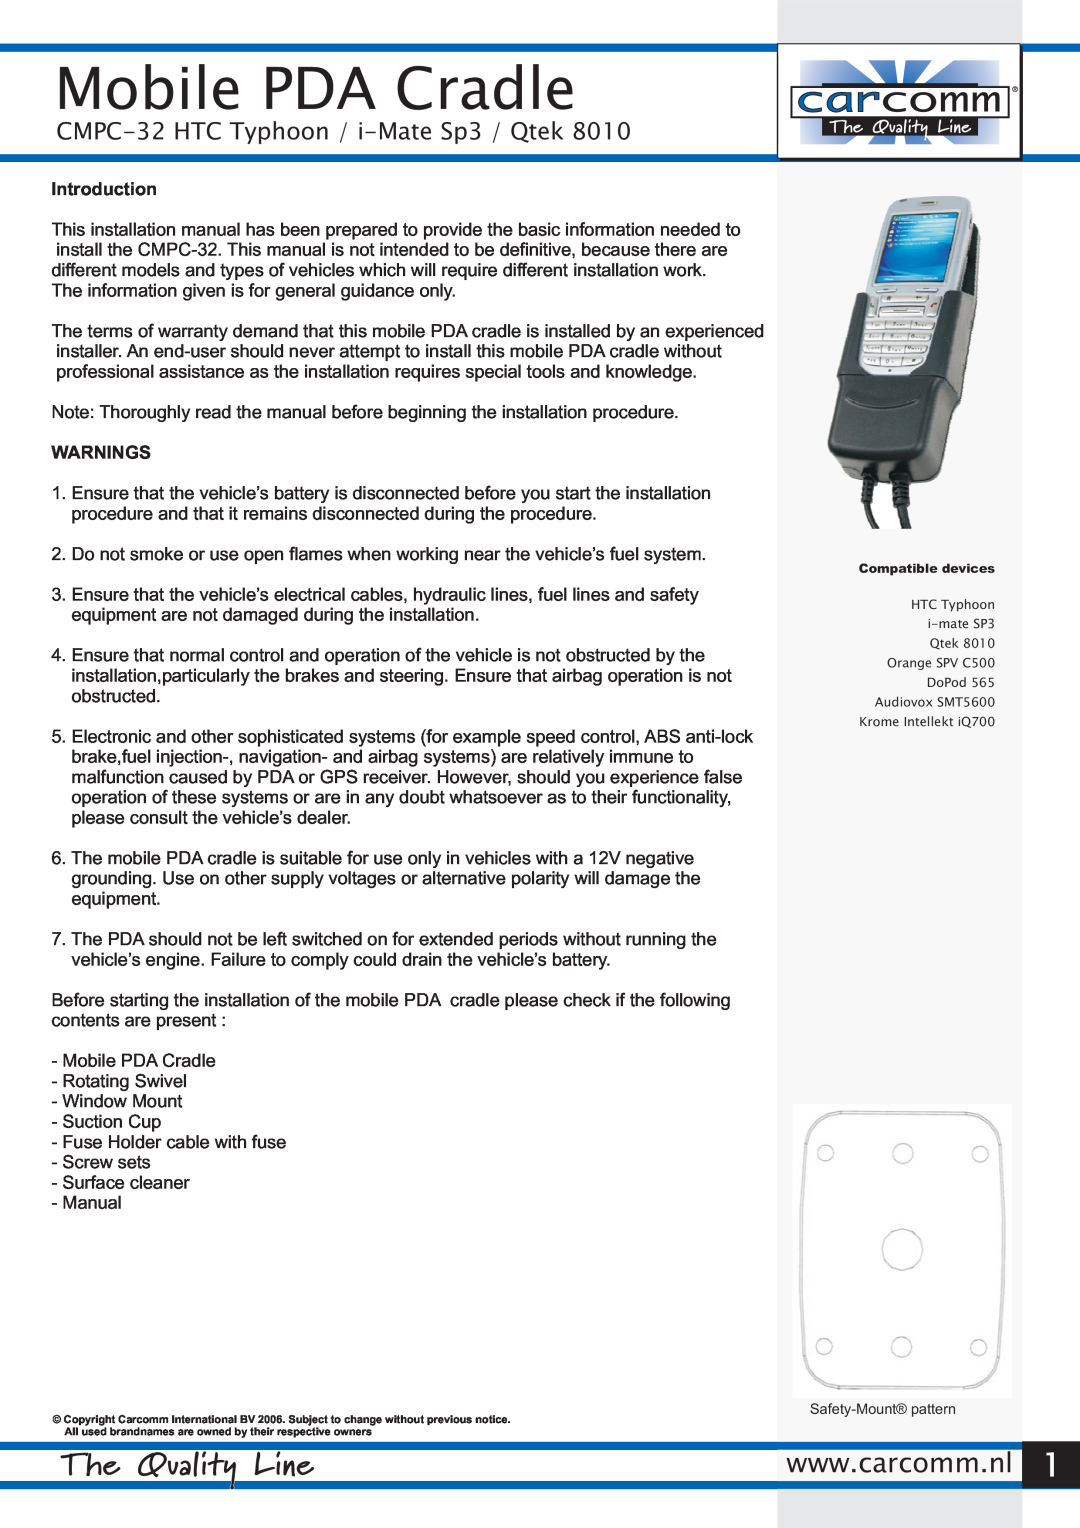 Carcomm manual Mobile PDA Cradle, CMPC-32 HTC Typhoon / i-Mate Sp3 / Qtek, Introduction, Warnings 